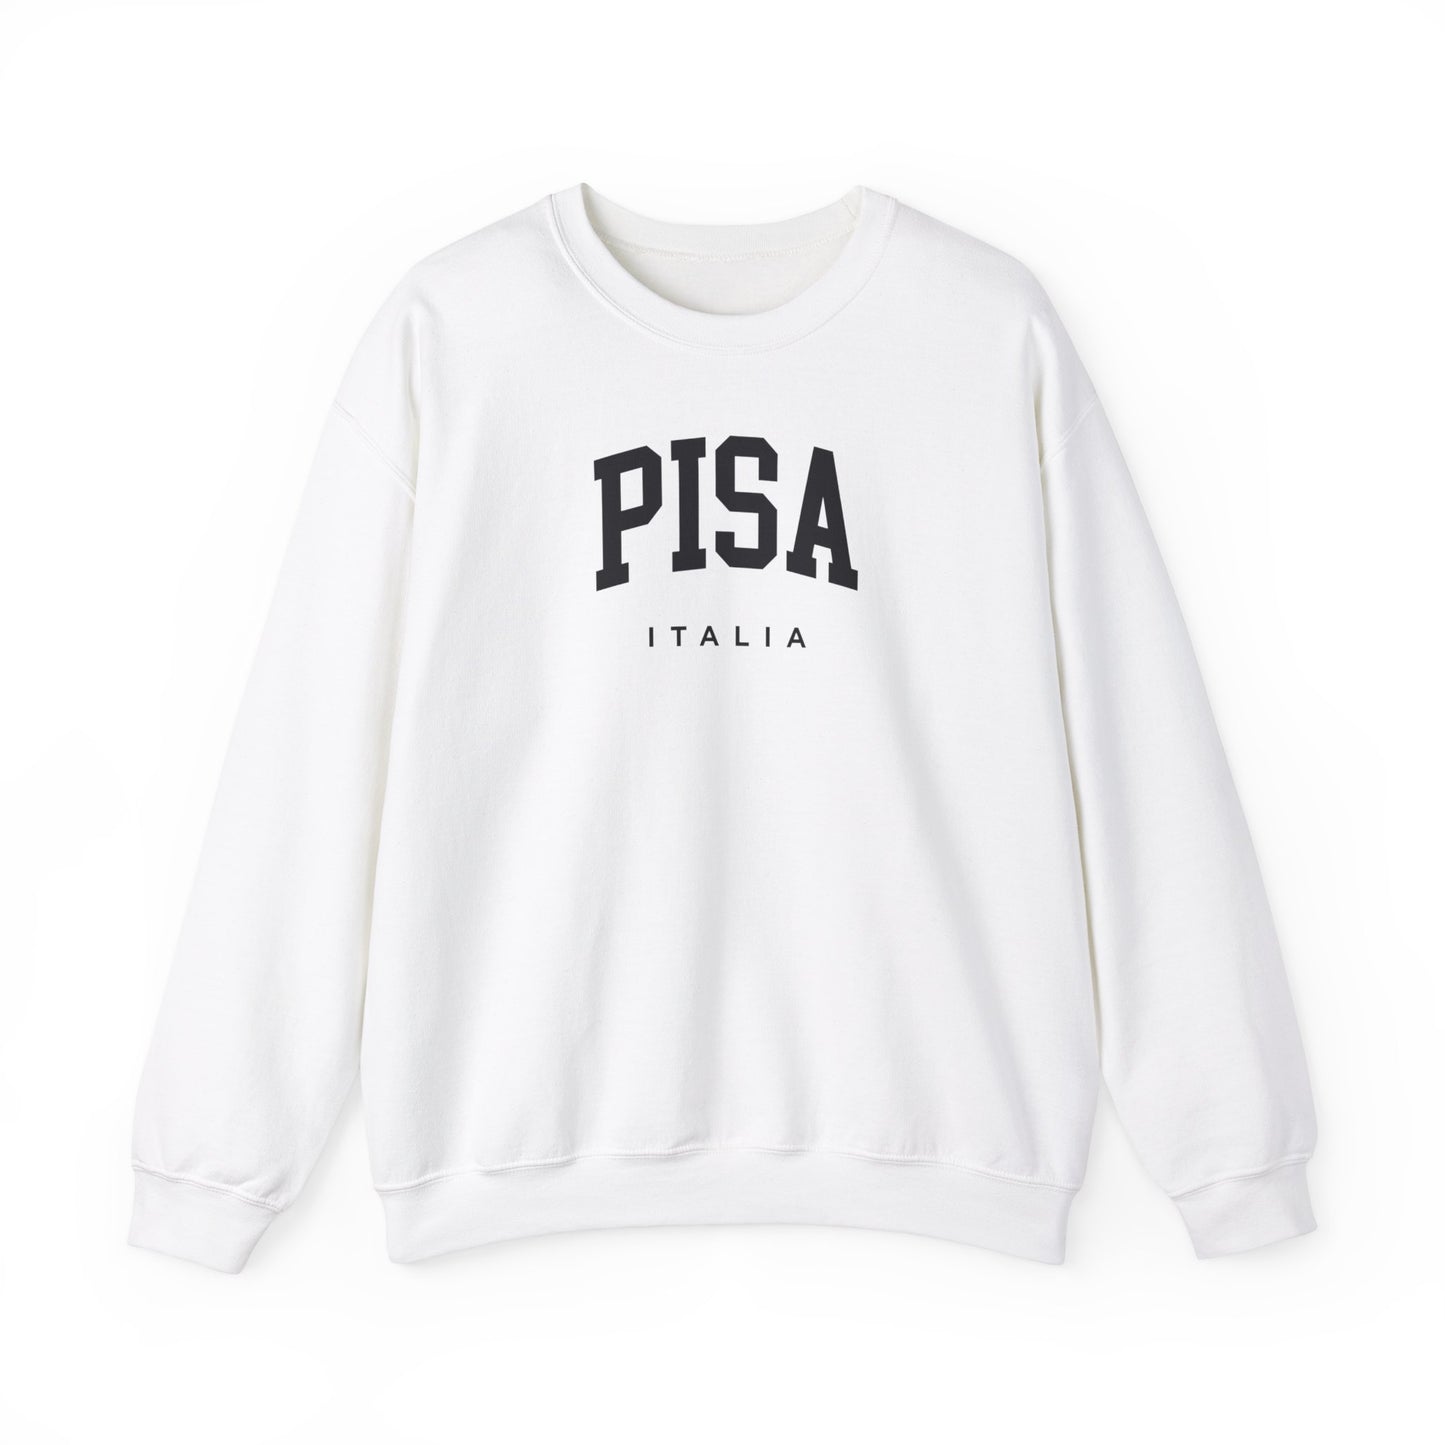 Pisa Italy Sweatshirt